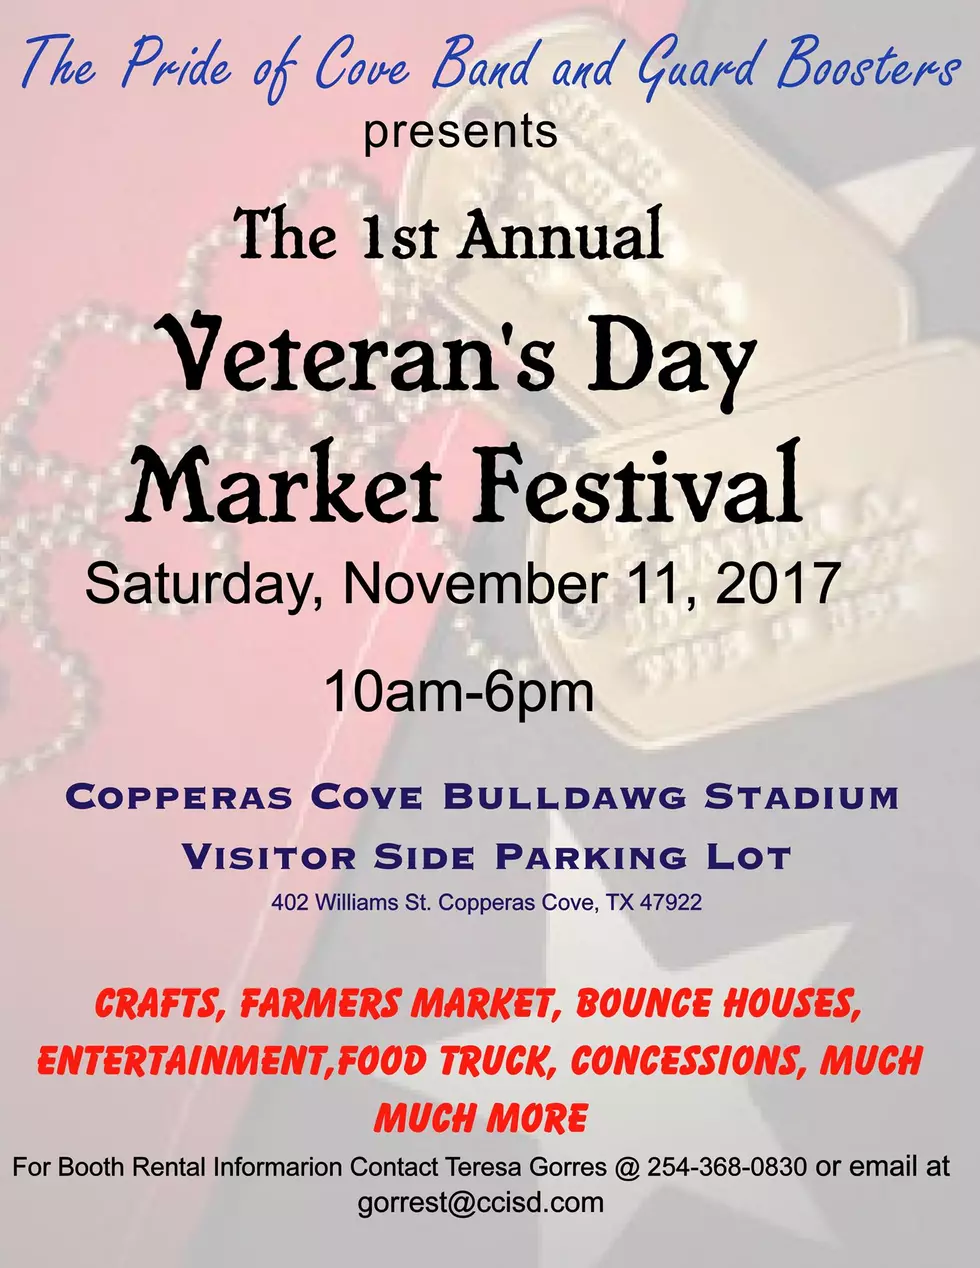 Copperas Cove Veterans Day Market Festival Benefiting Pride Of Cove Band